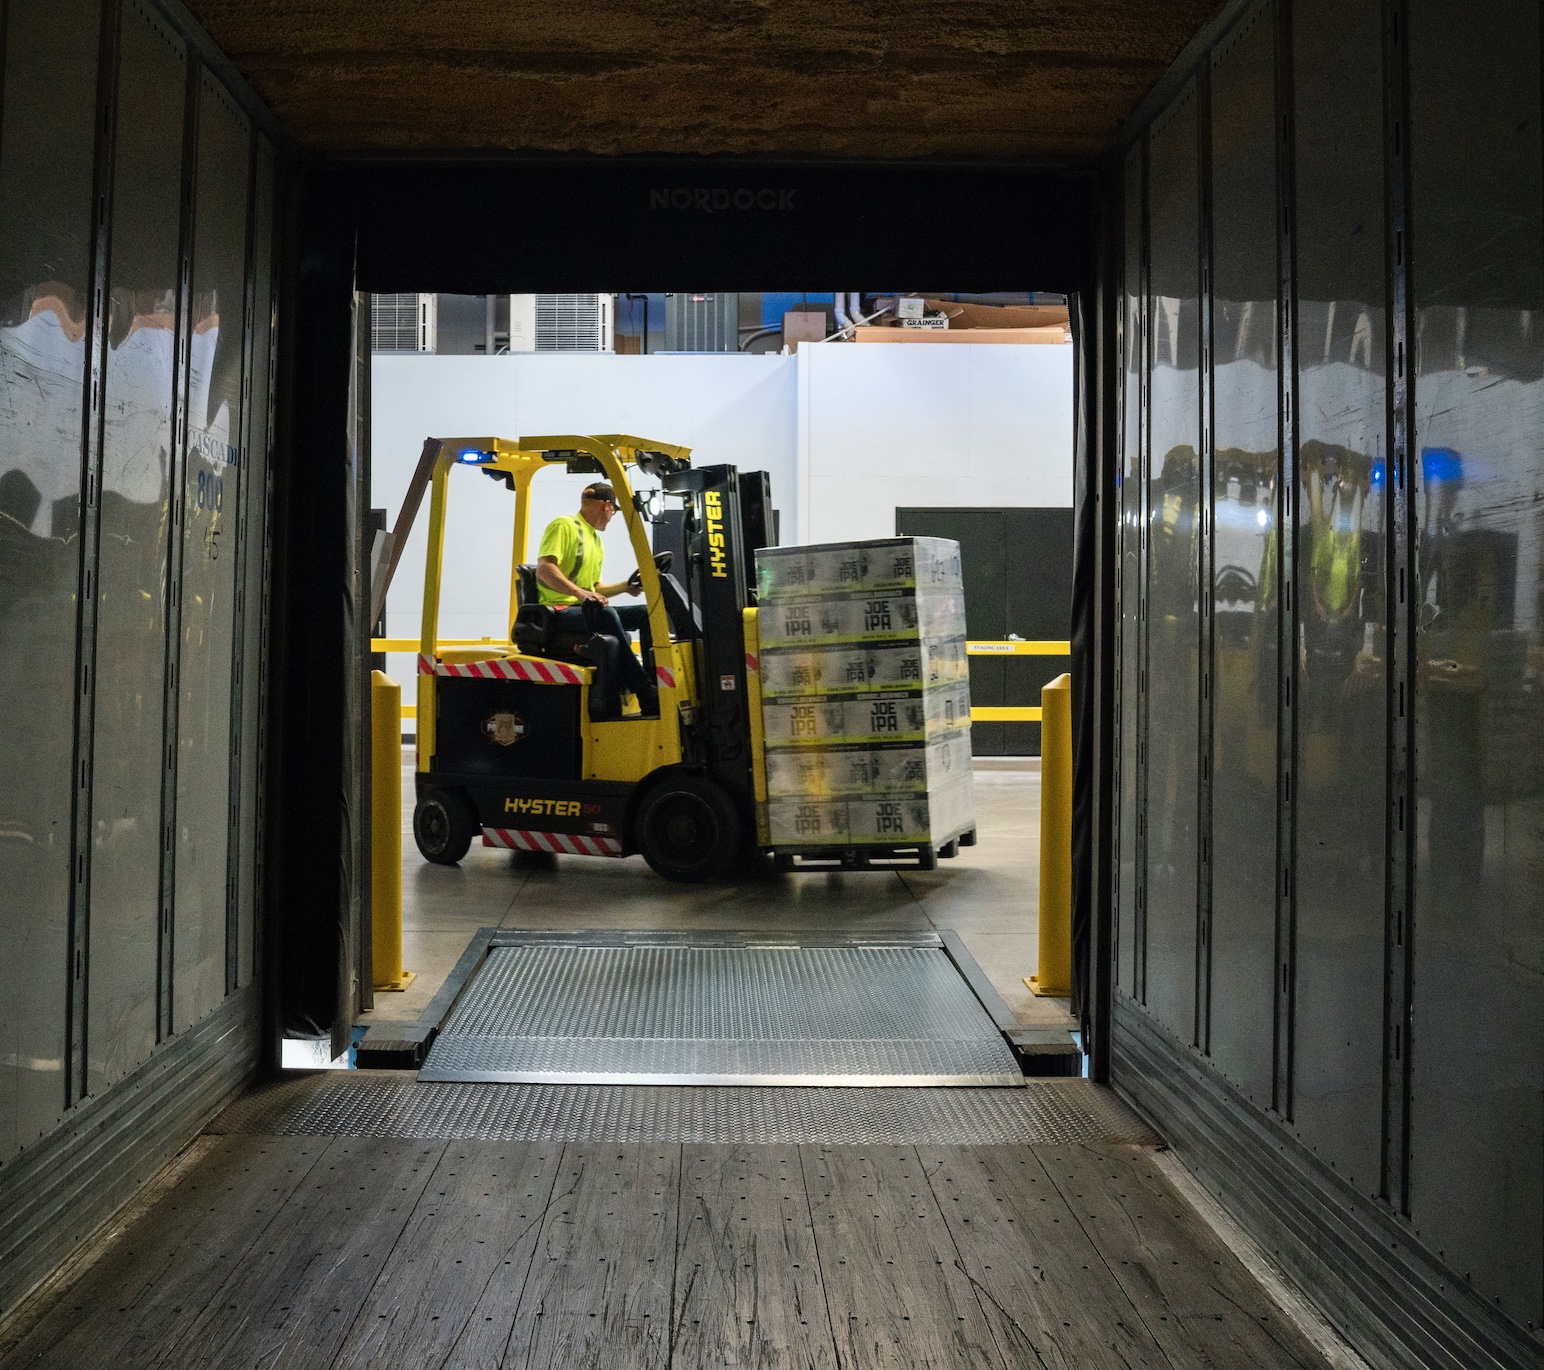 Forklift loading boxes into trailer; image by Elevate, via Unsplash.com.